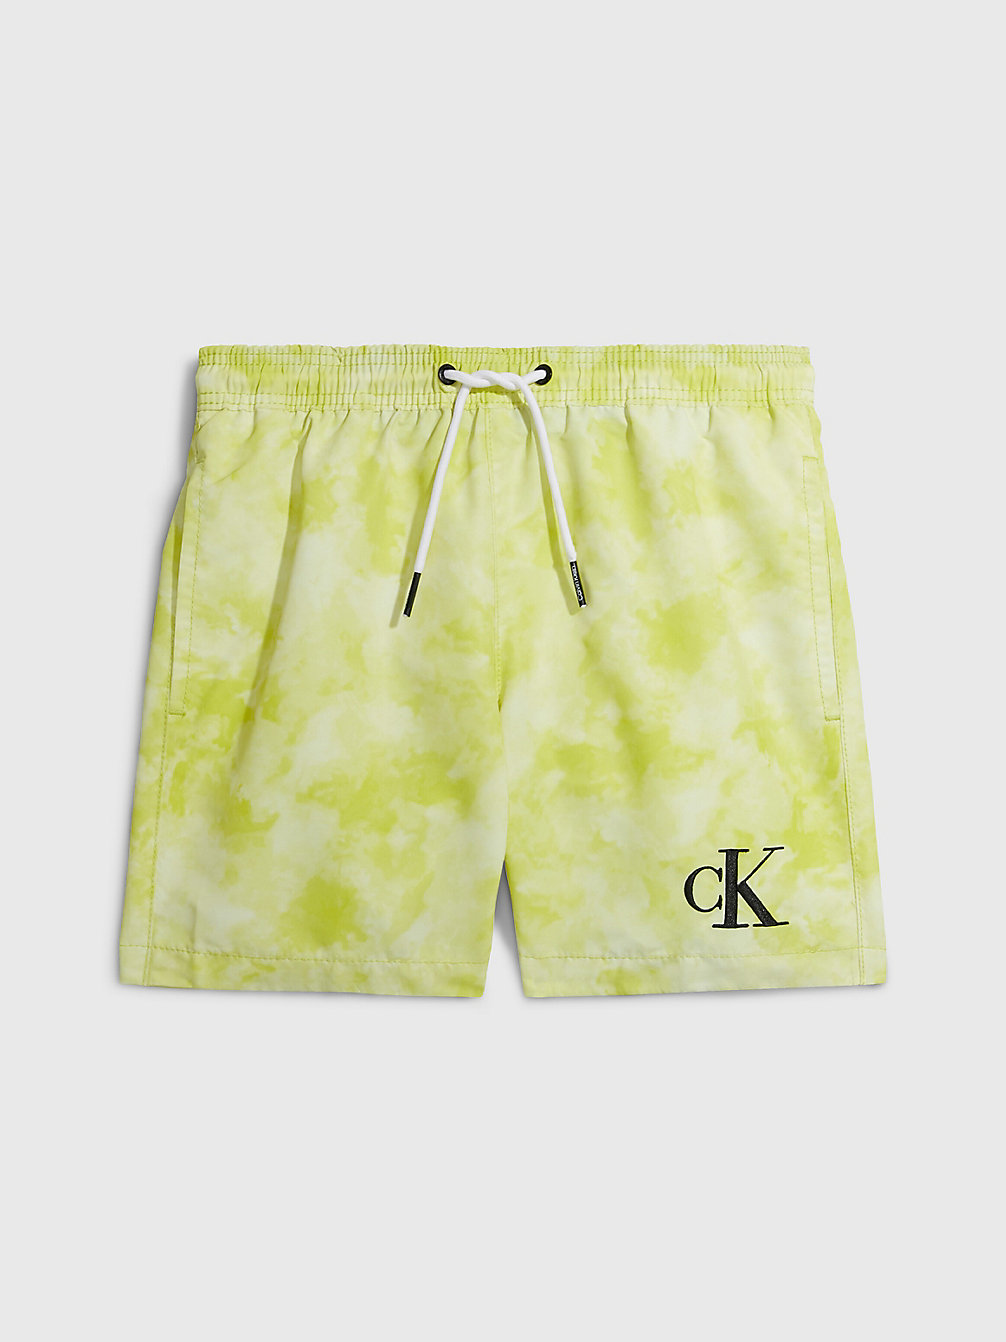 CK TIE DYE YELLOW AOP Boys Swim Shorts - Authentic undefined boys Calvin Klein